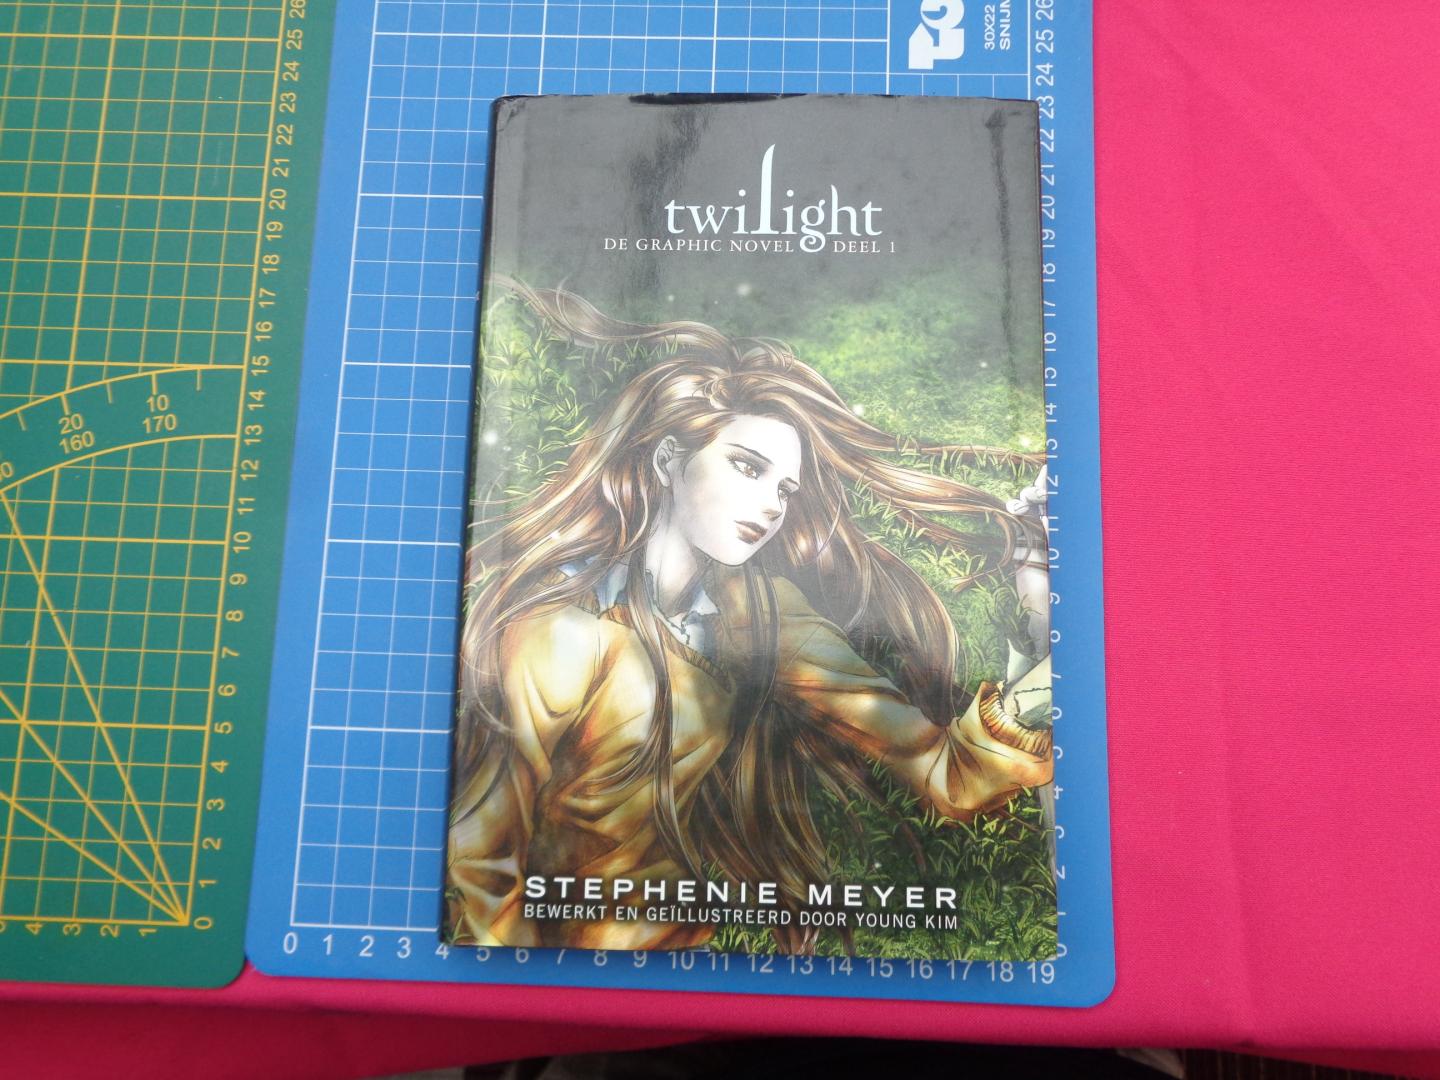 Stephenie Meyer - Twilight de graphic novel deel 1